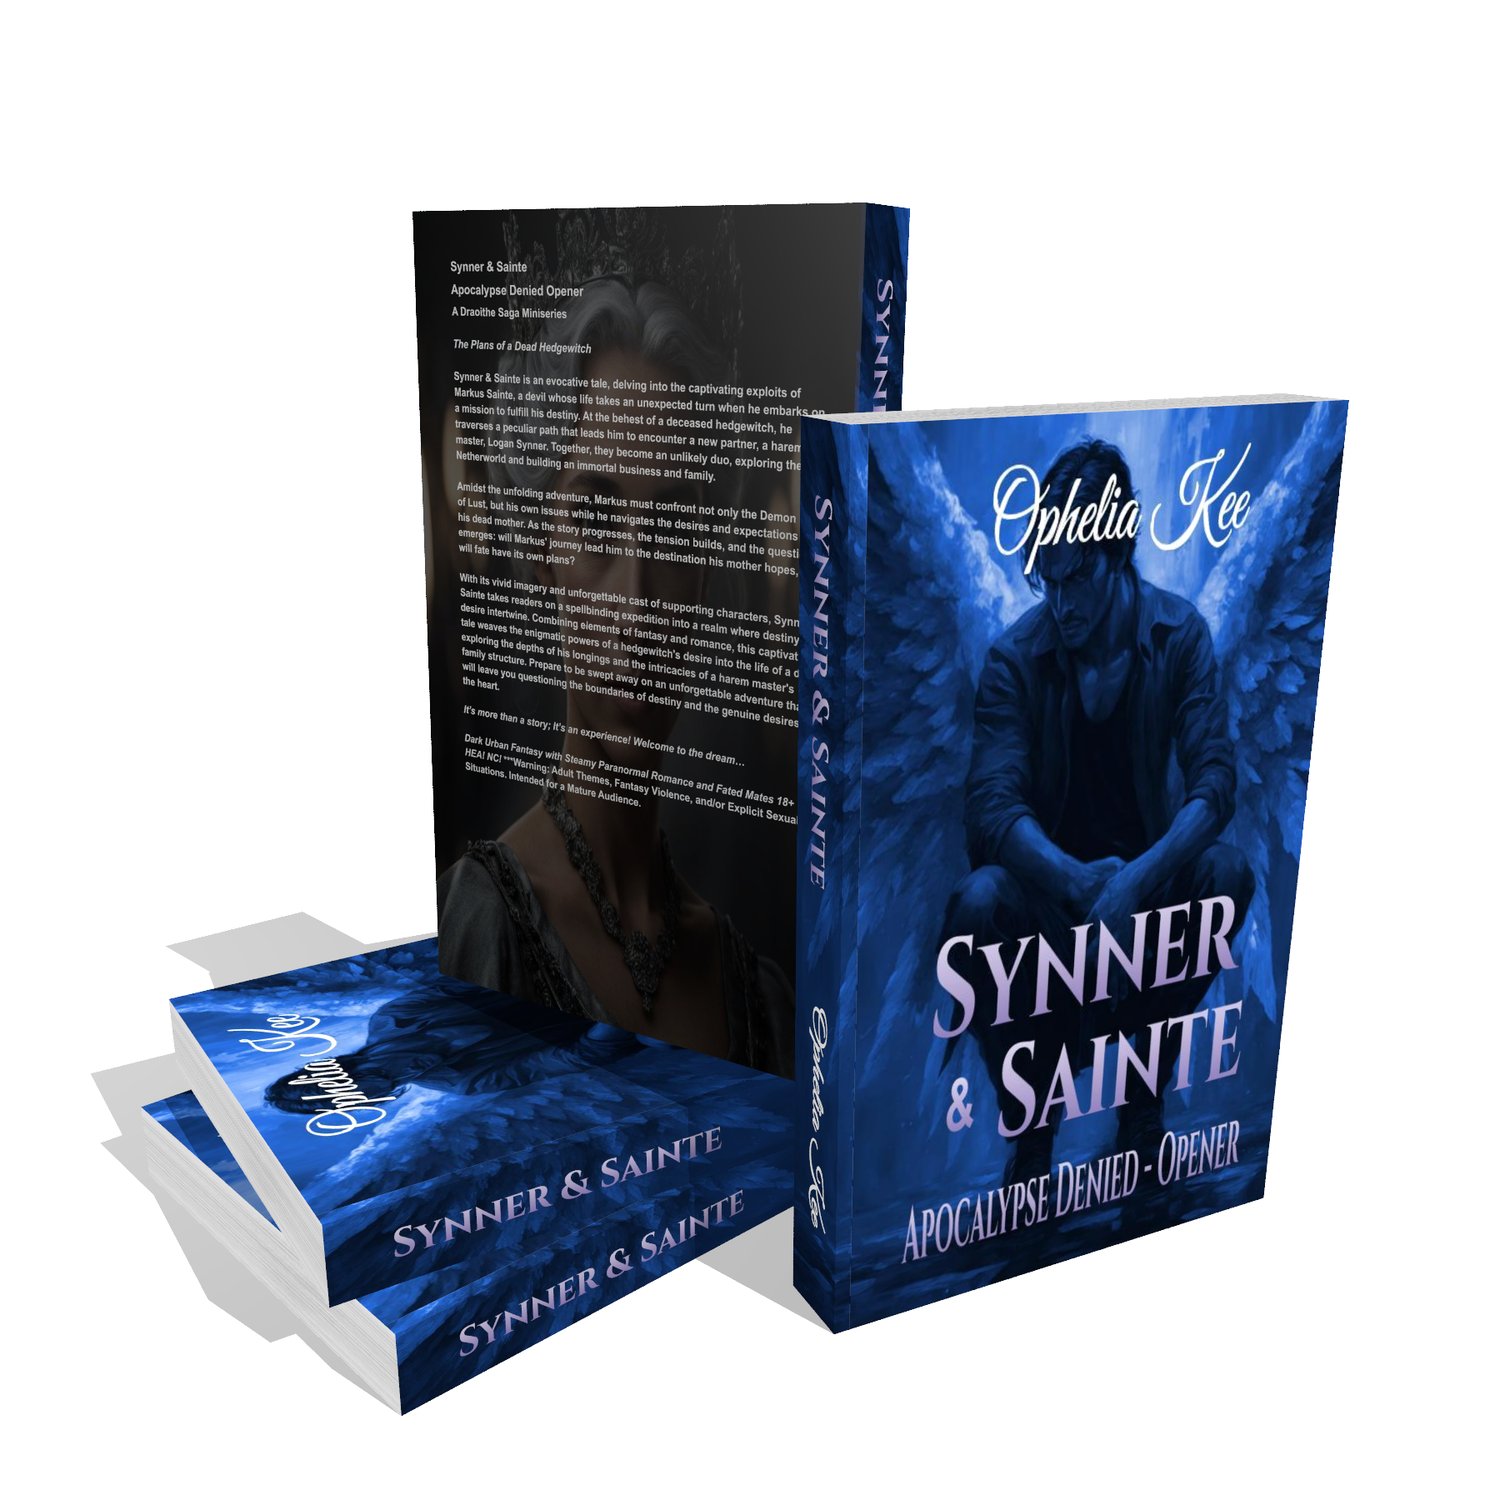 Synner & Sainte Book Stack